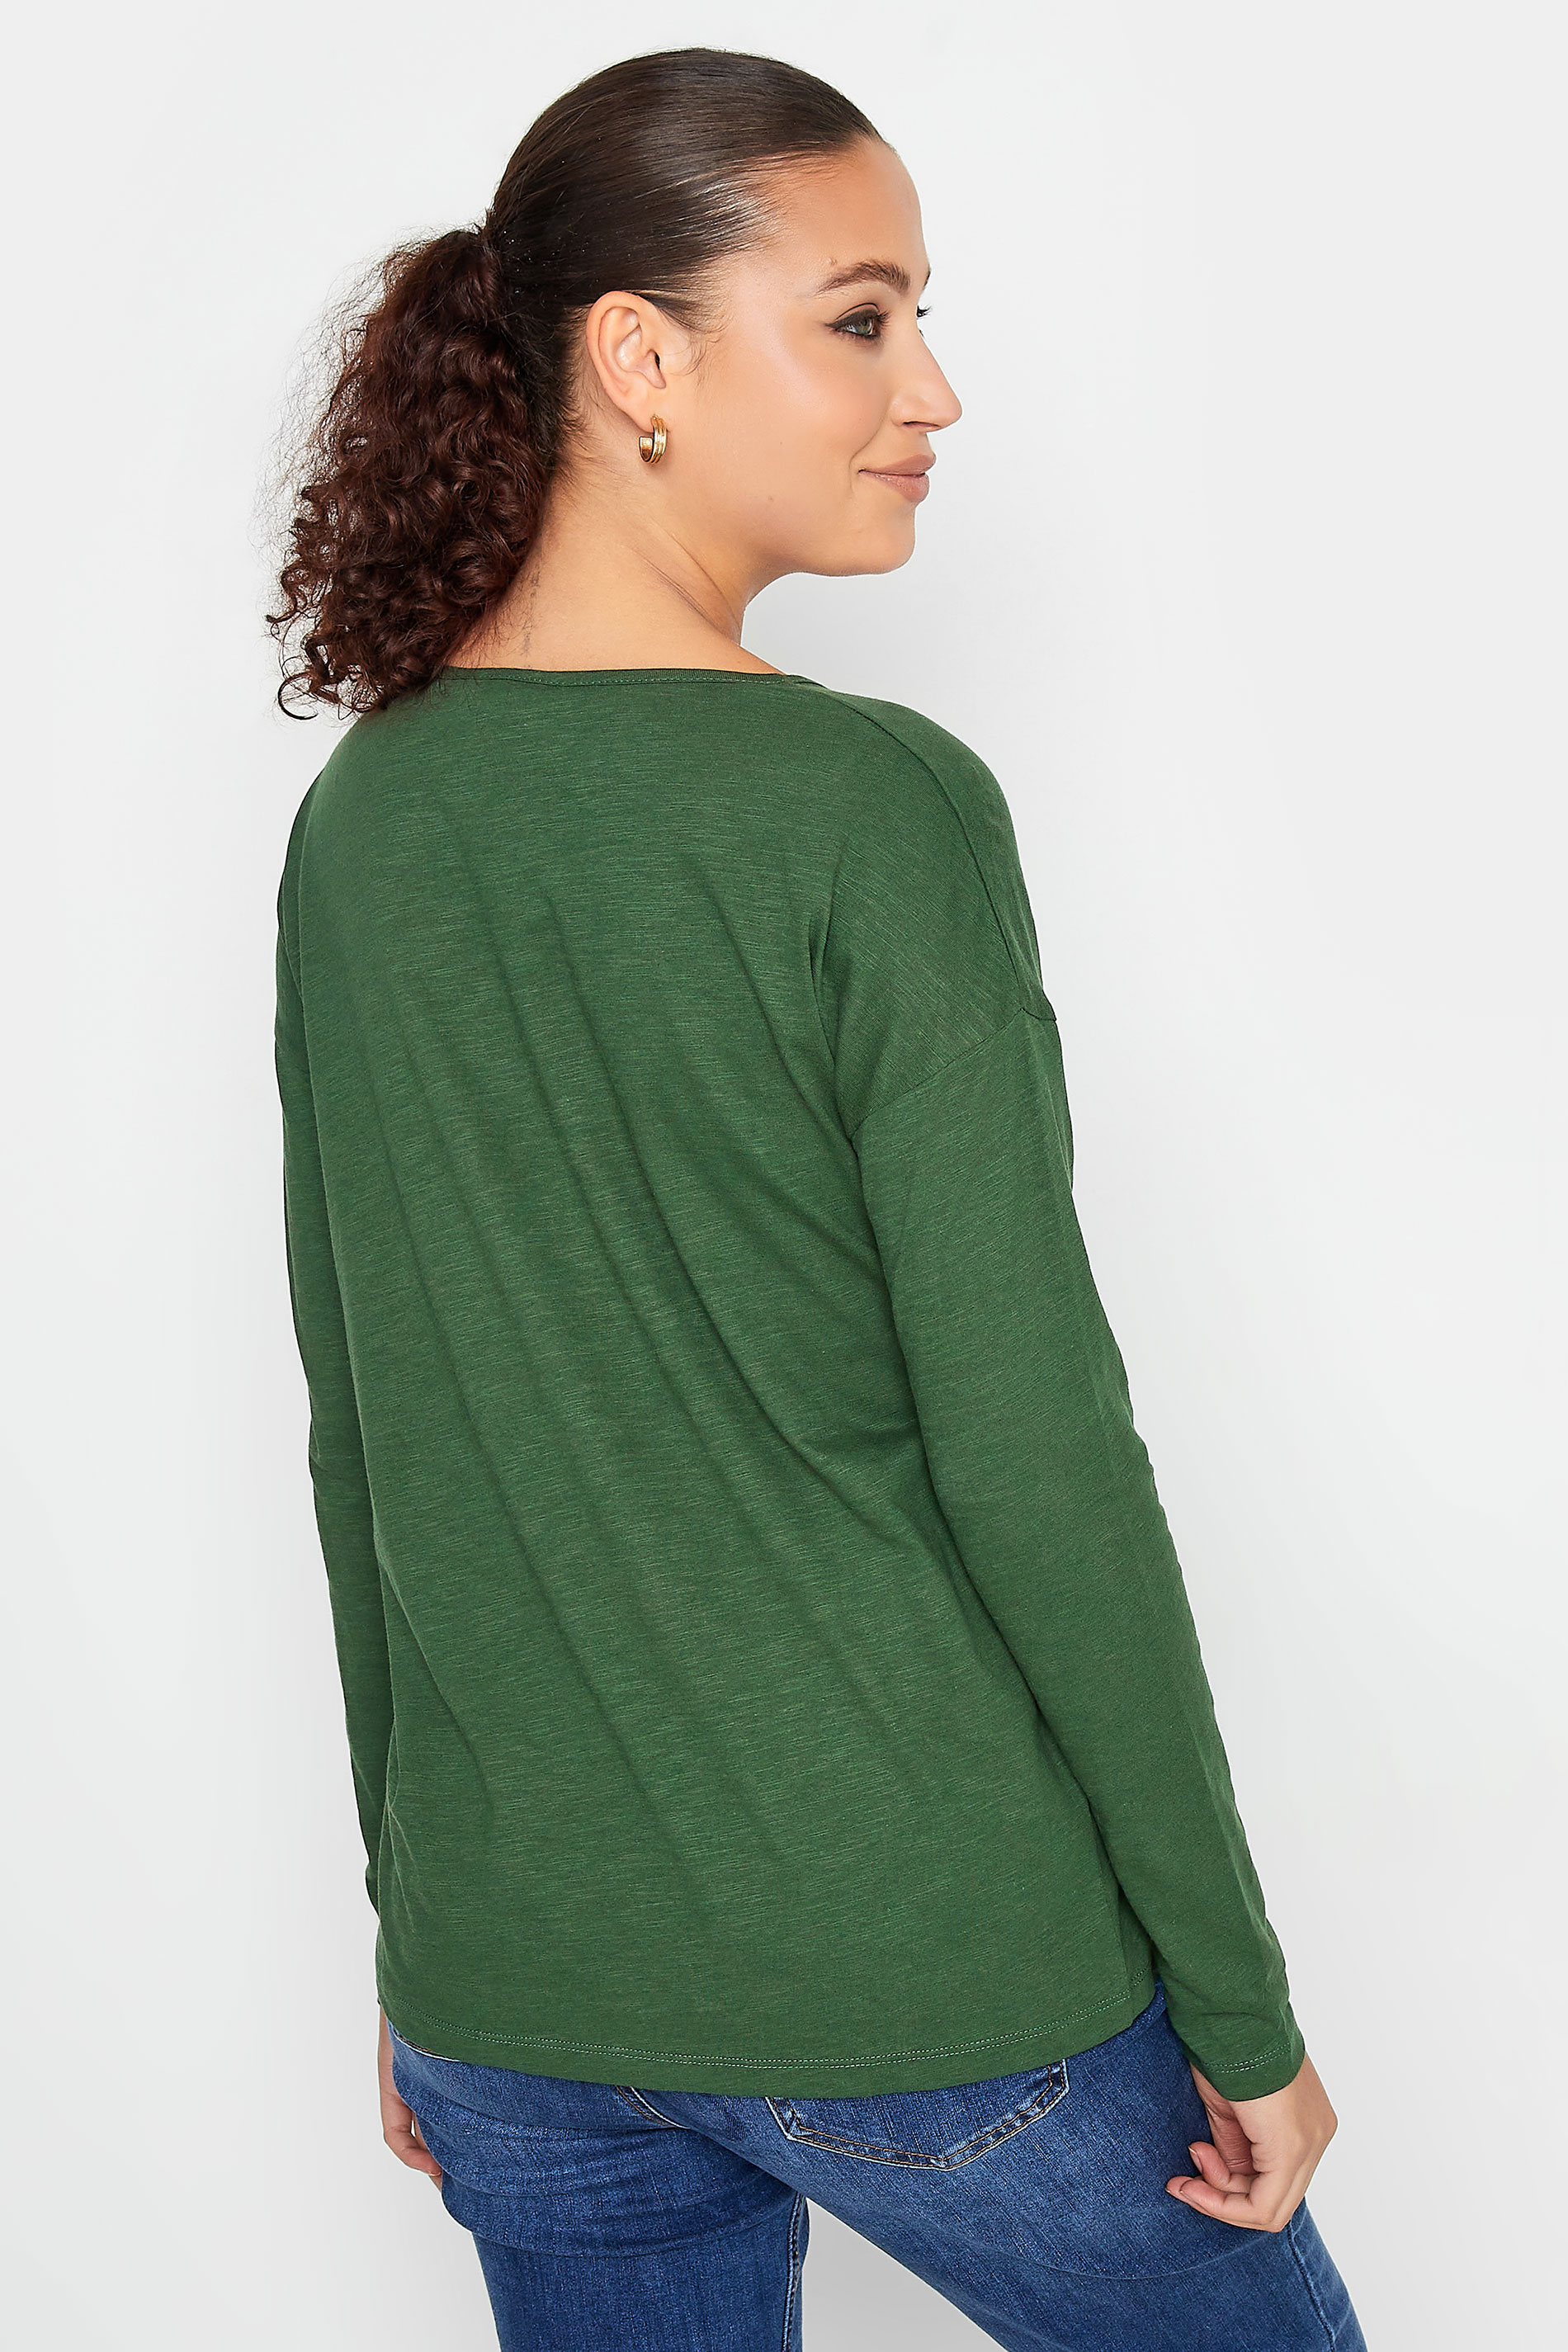 LTS Tall Green V-Neck Long Sleeve Cotton T-Shirt | Long Tall Sally 3